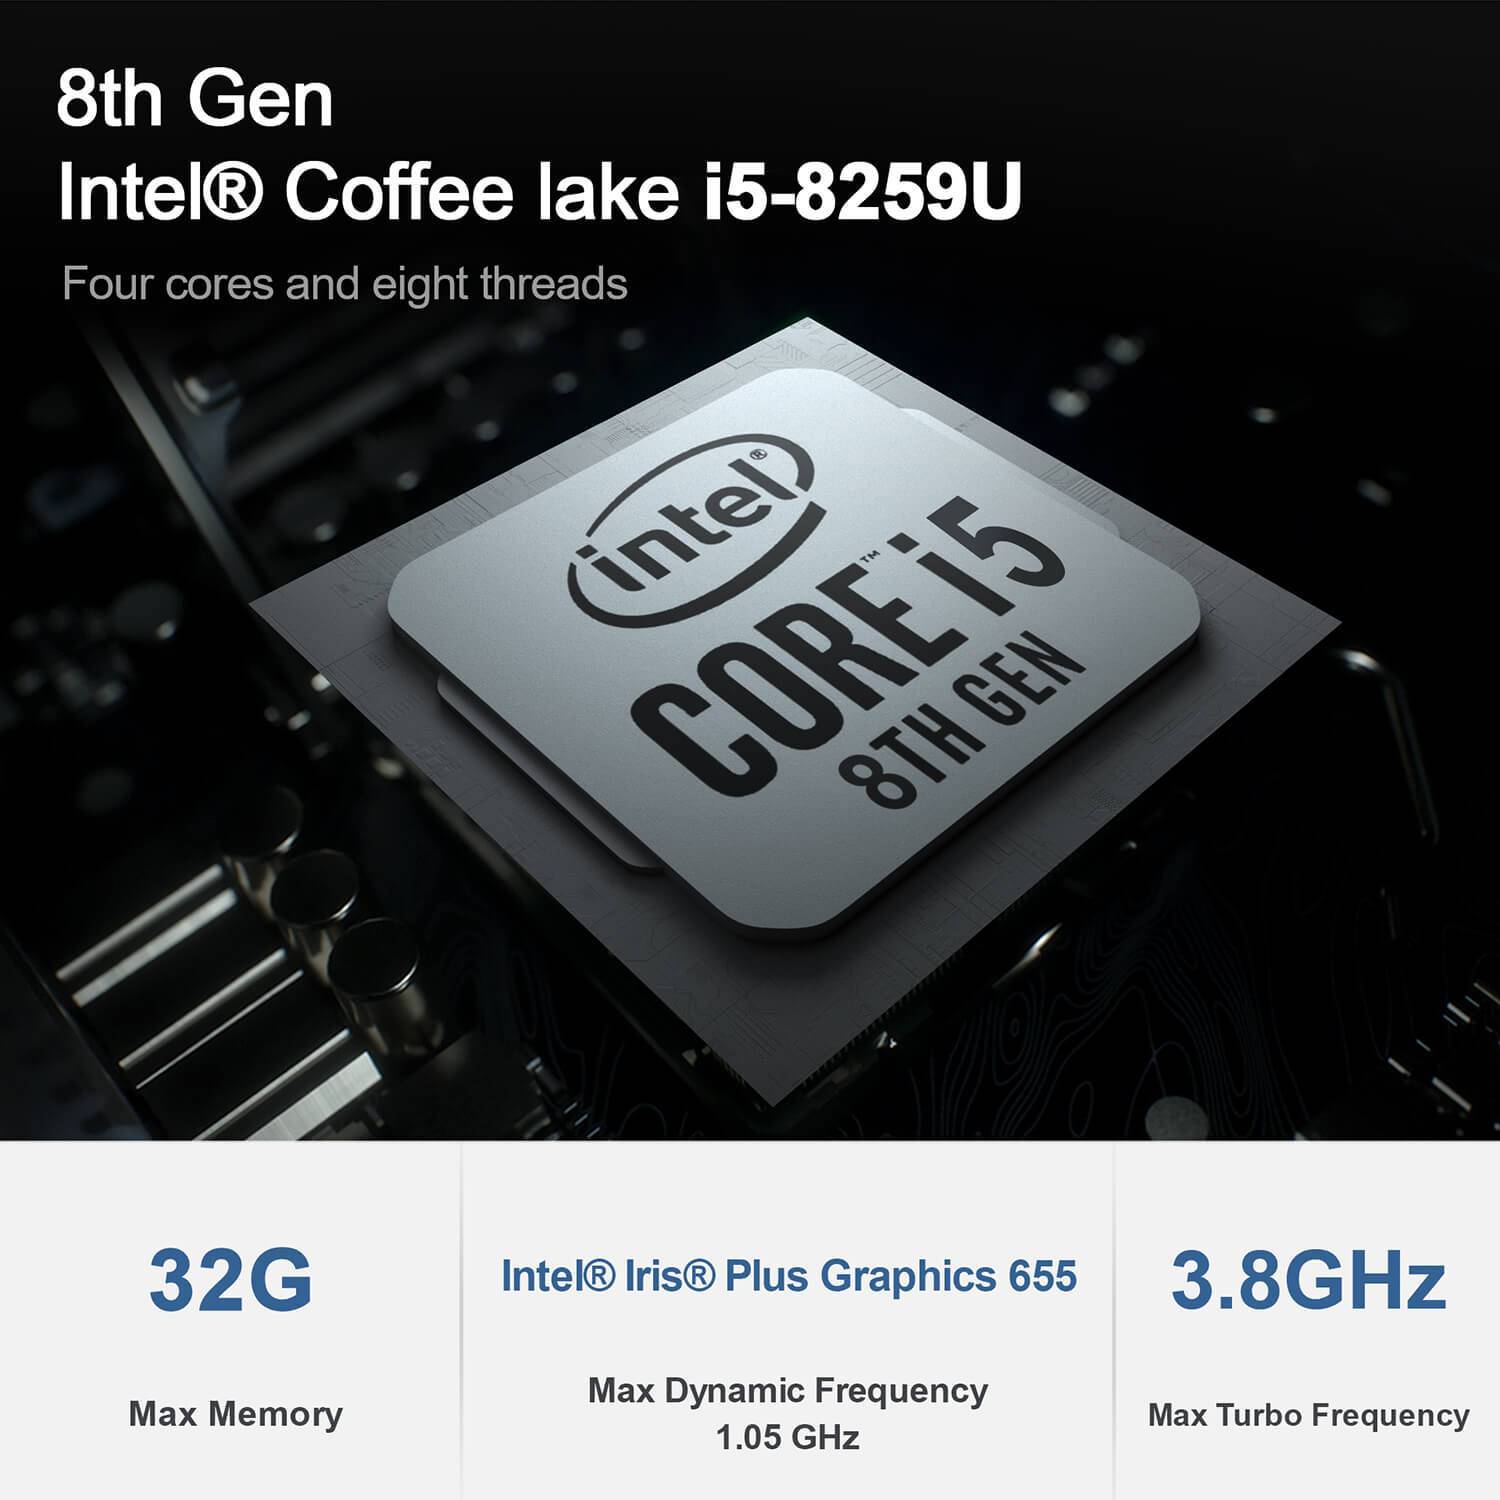 Beelink SEi 8 Windows 10 Mini PC - Showing Intel Core i5 processor specifications